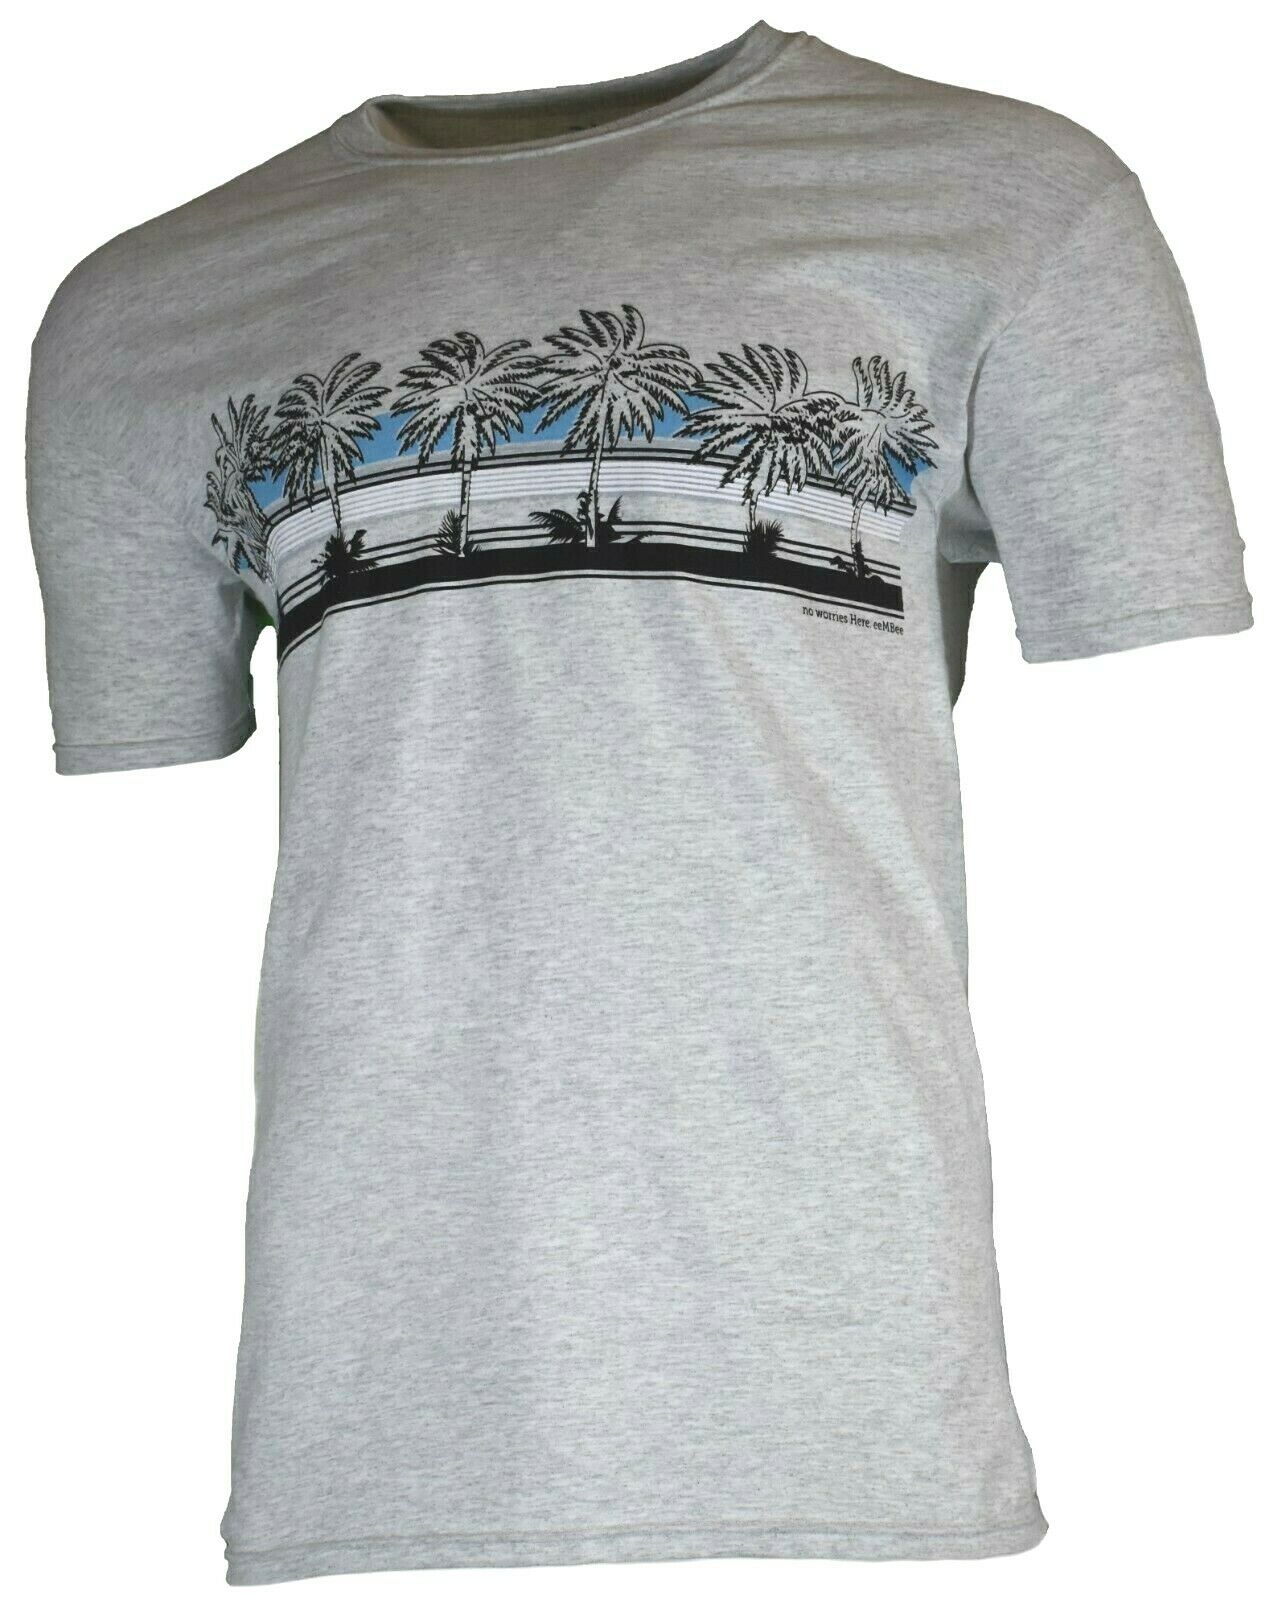 Men's T-Shirt Bahama Beach Palm Trees No Worries Here by eeMBee